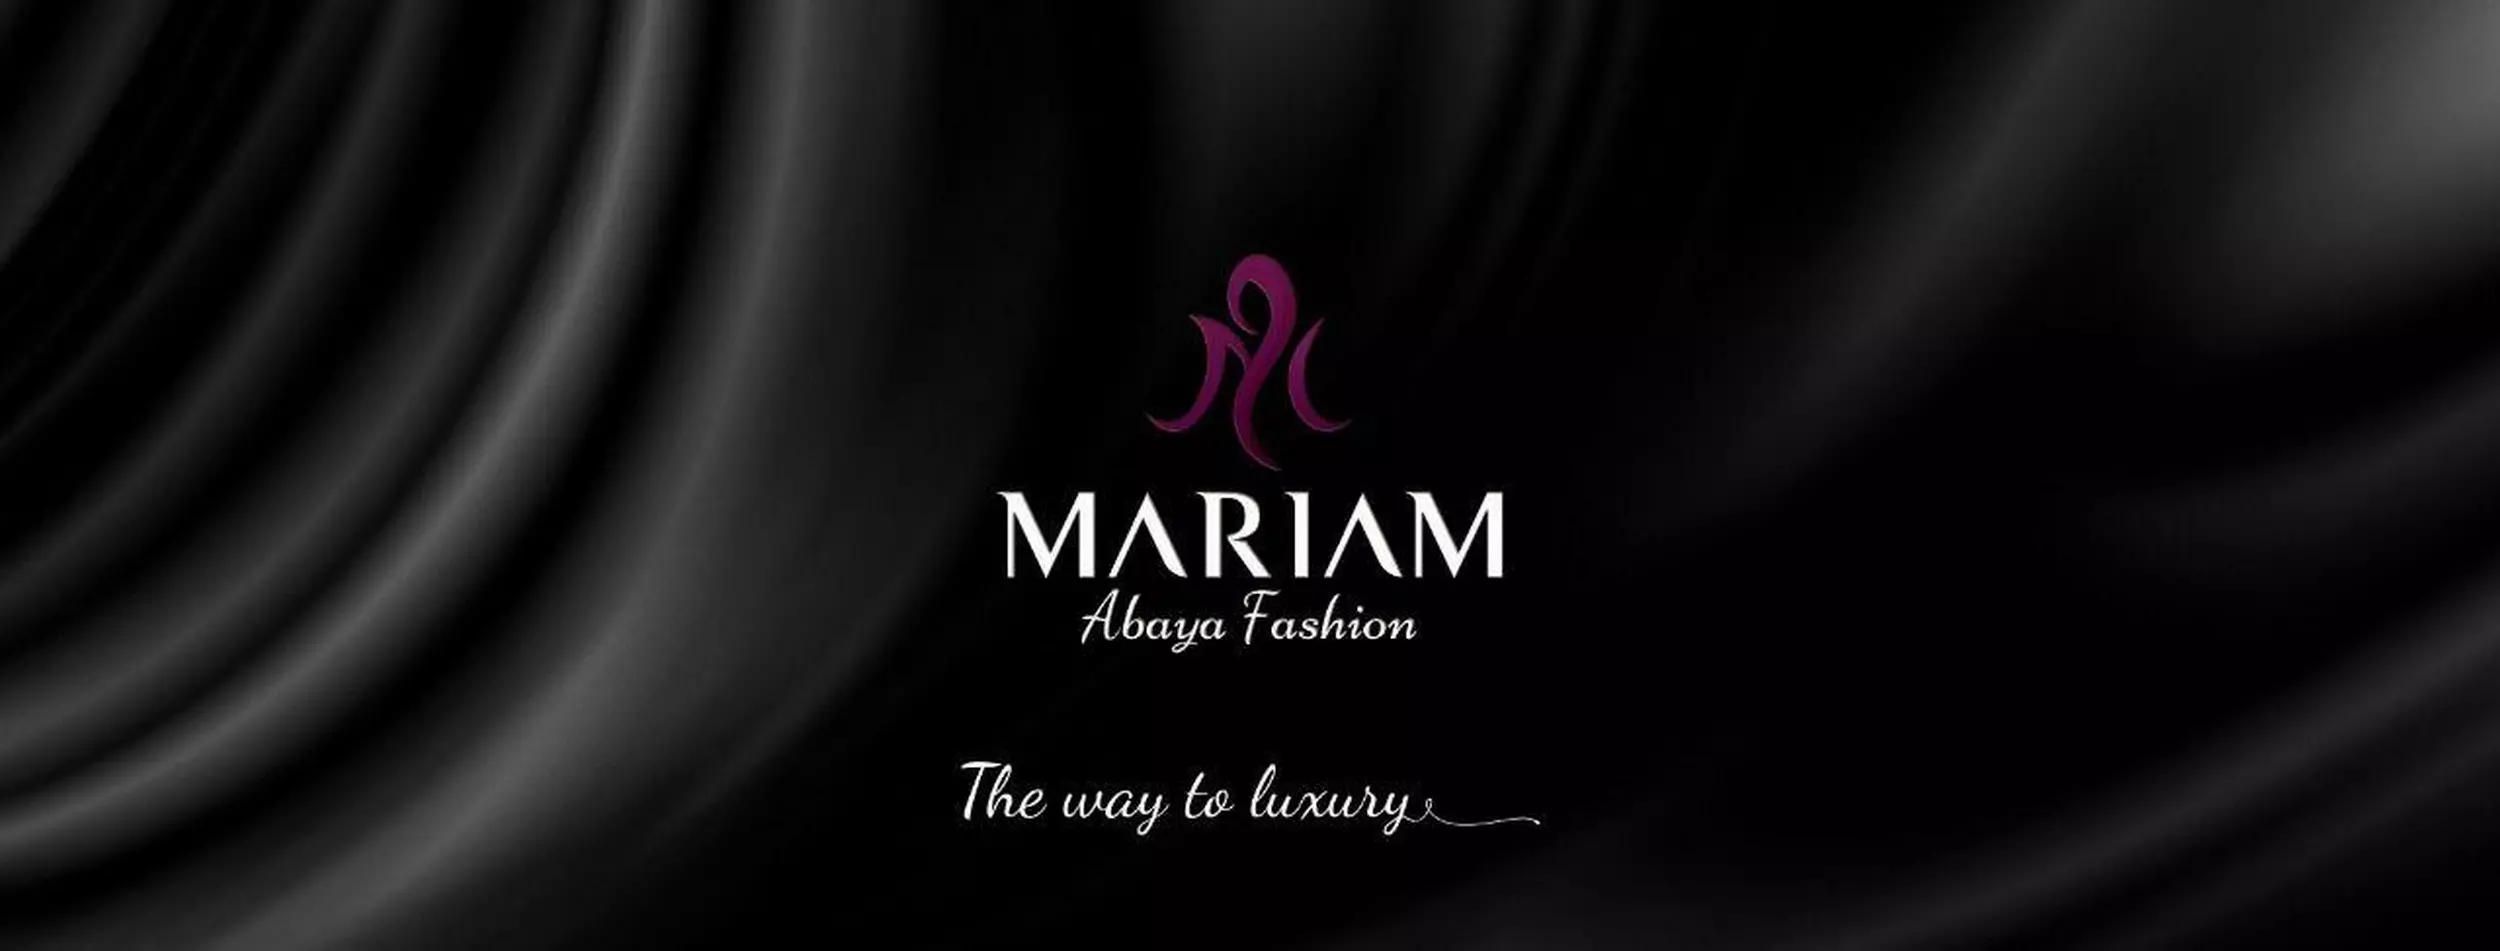 banner image for Mariam Abaya